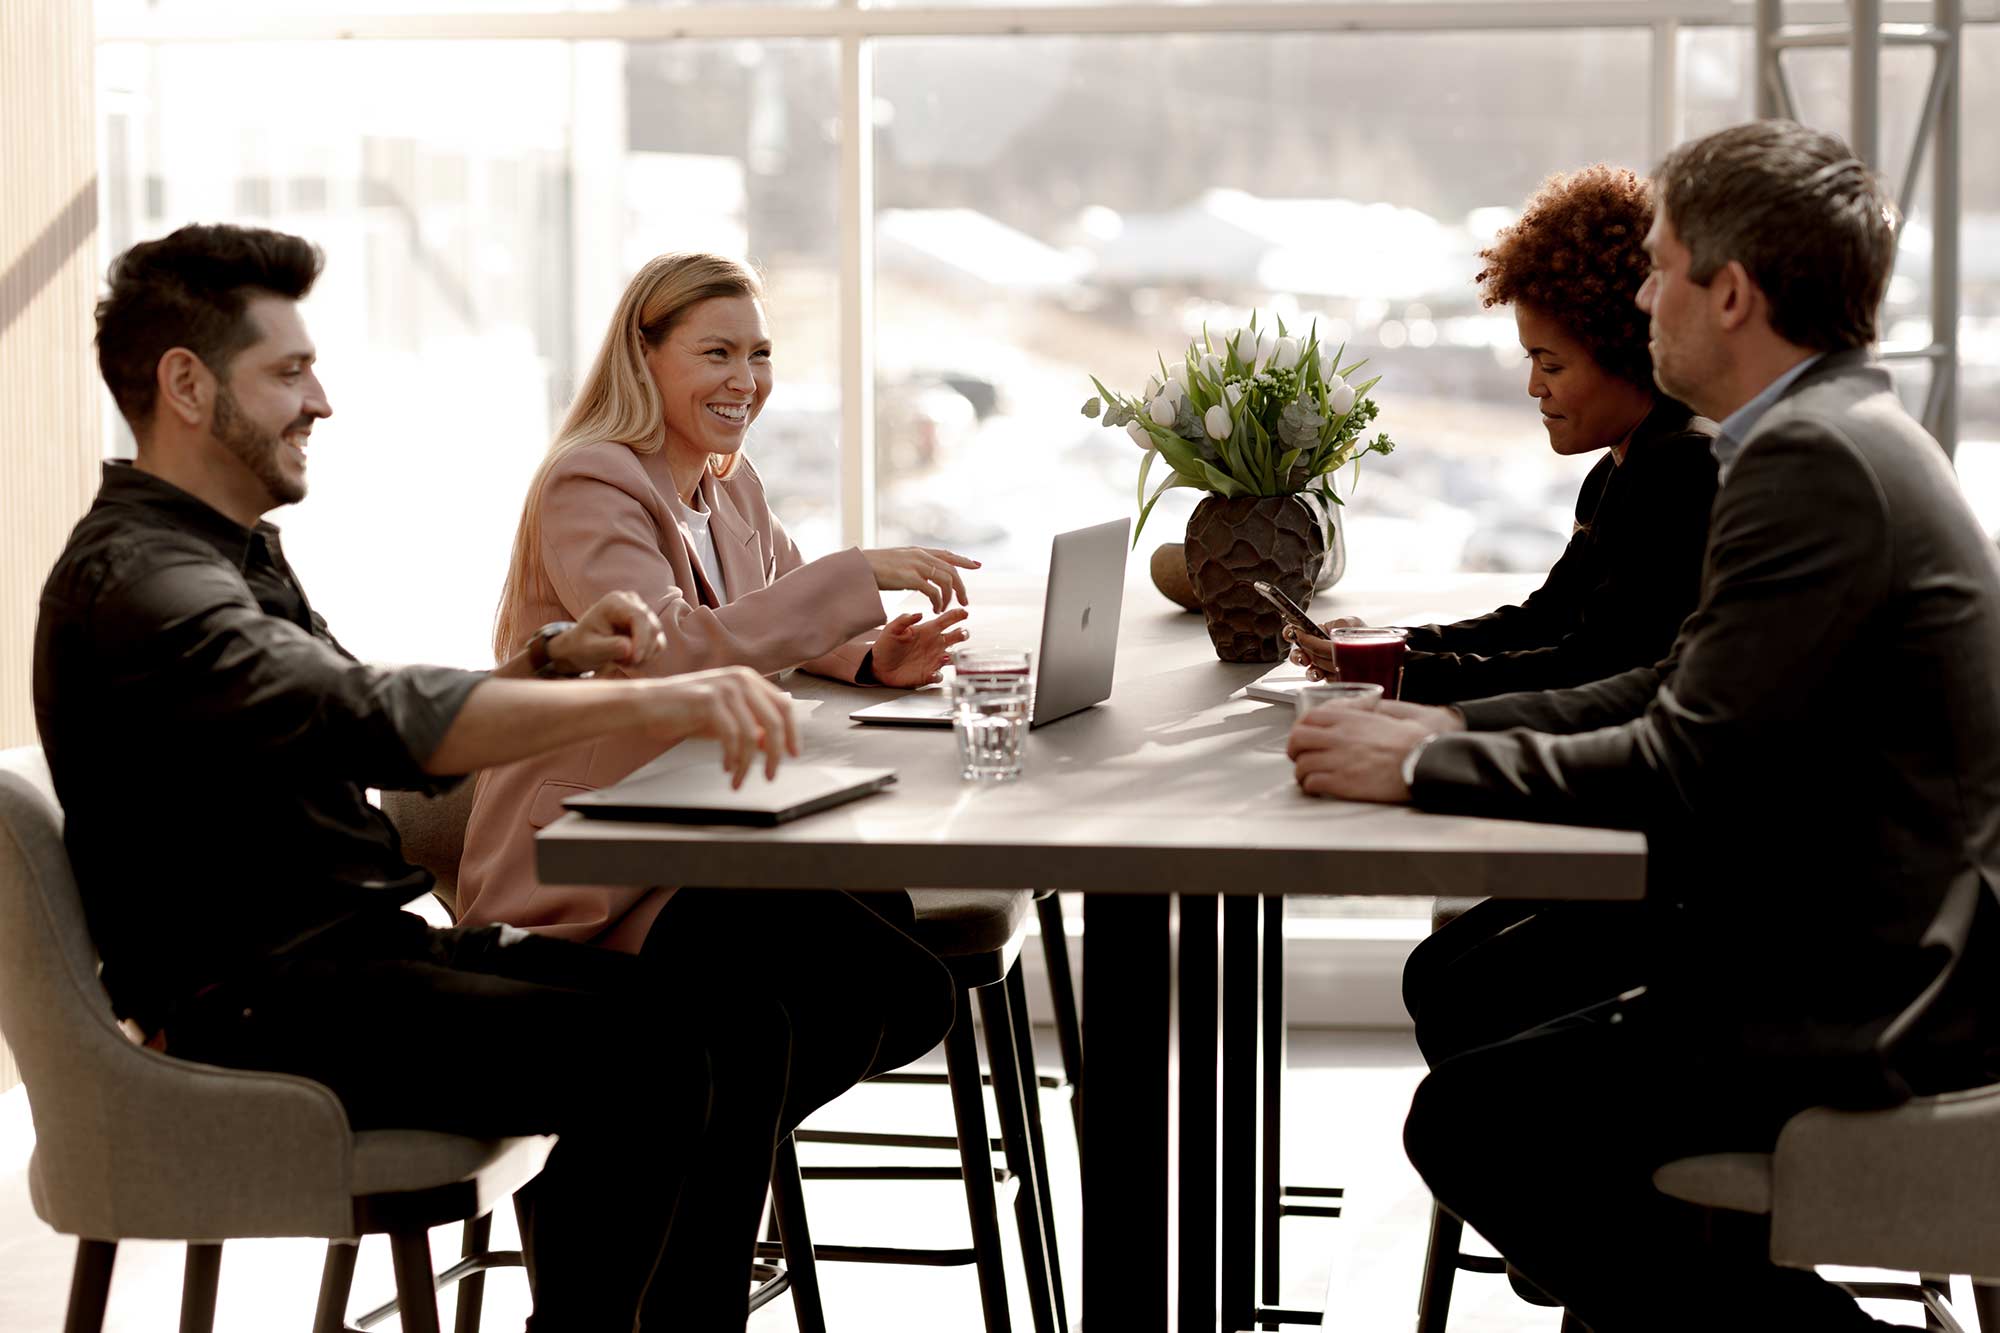 Fire personer sitter ved et bord og prater i kontorfellesskap/coworking